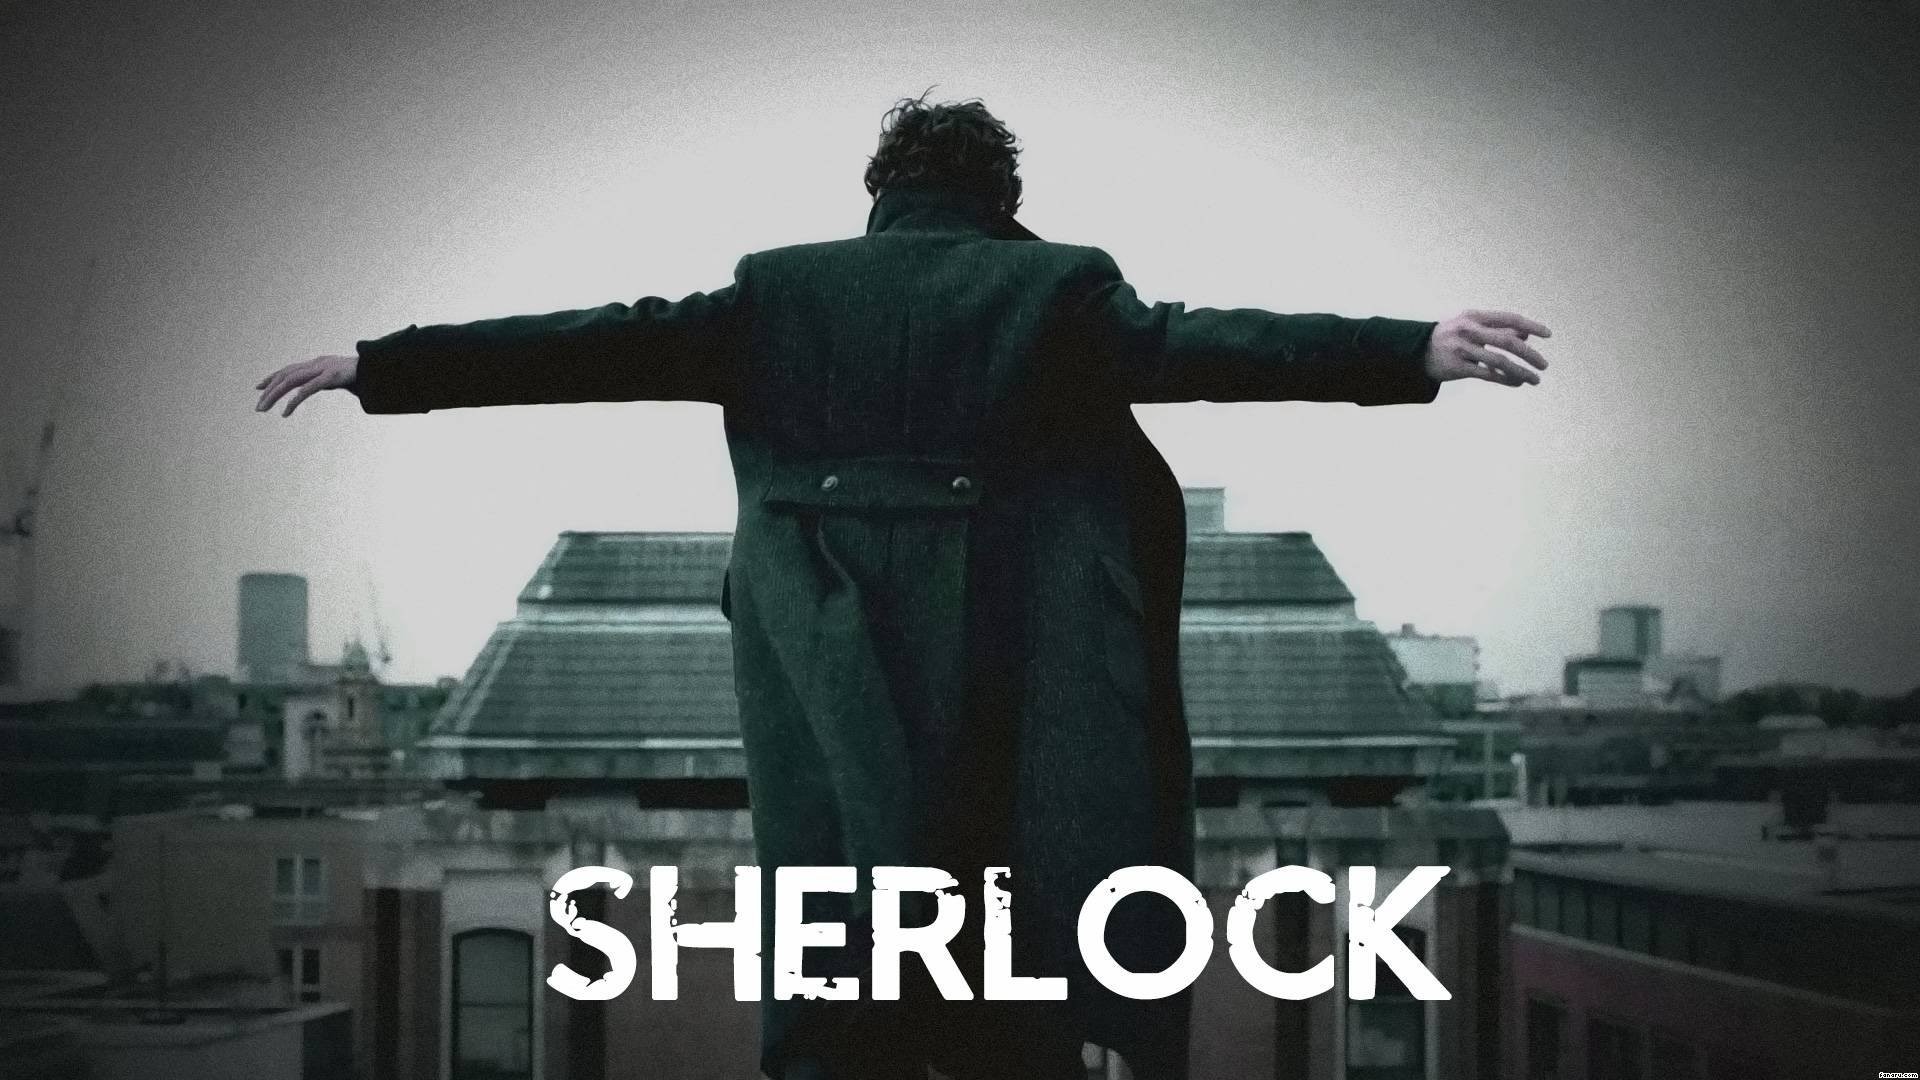 1920x1080 SHERLOCK crime drama mystery series bbc wallpaper background